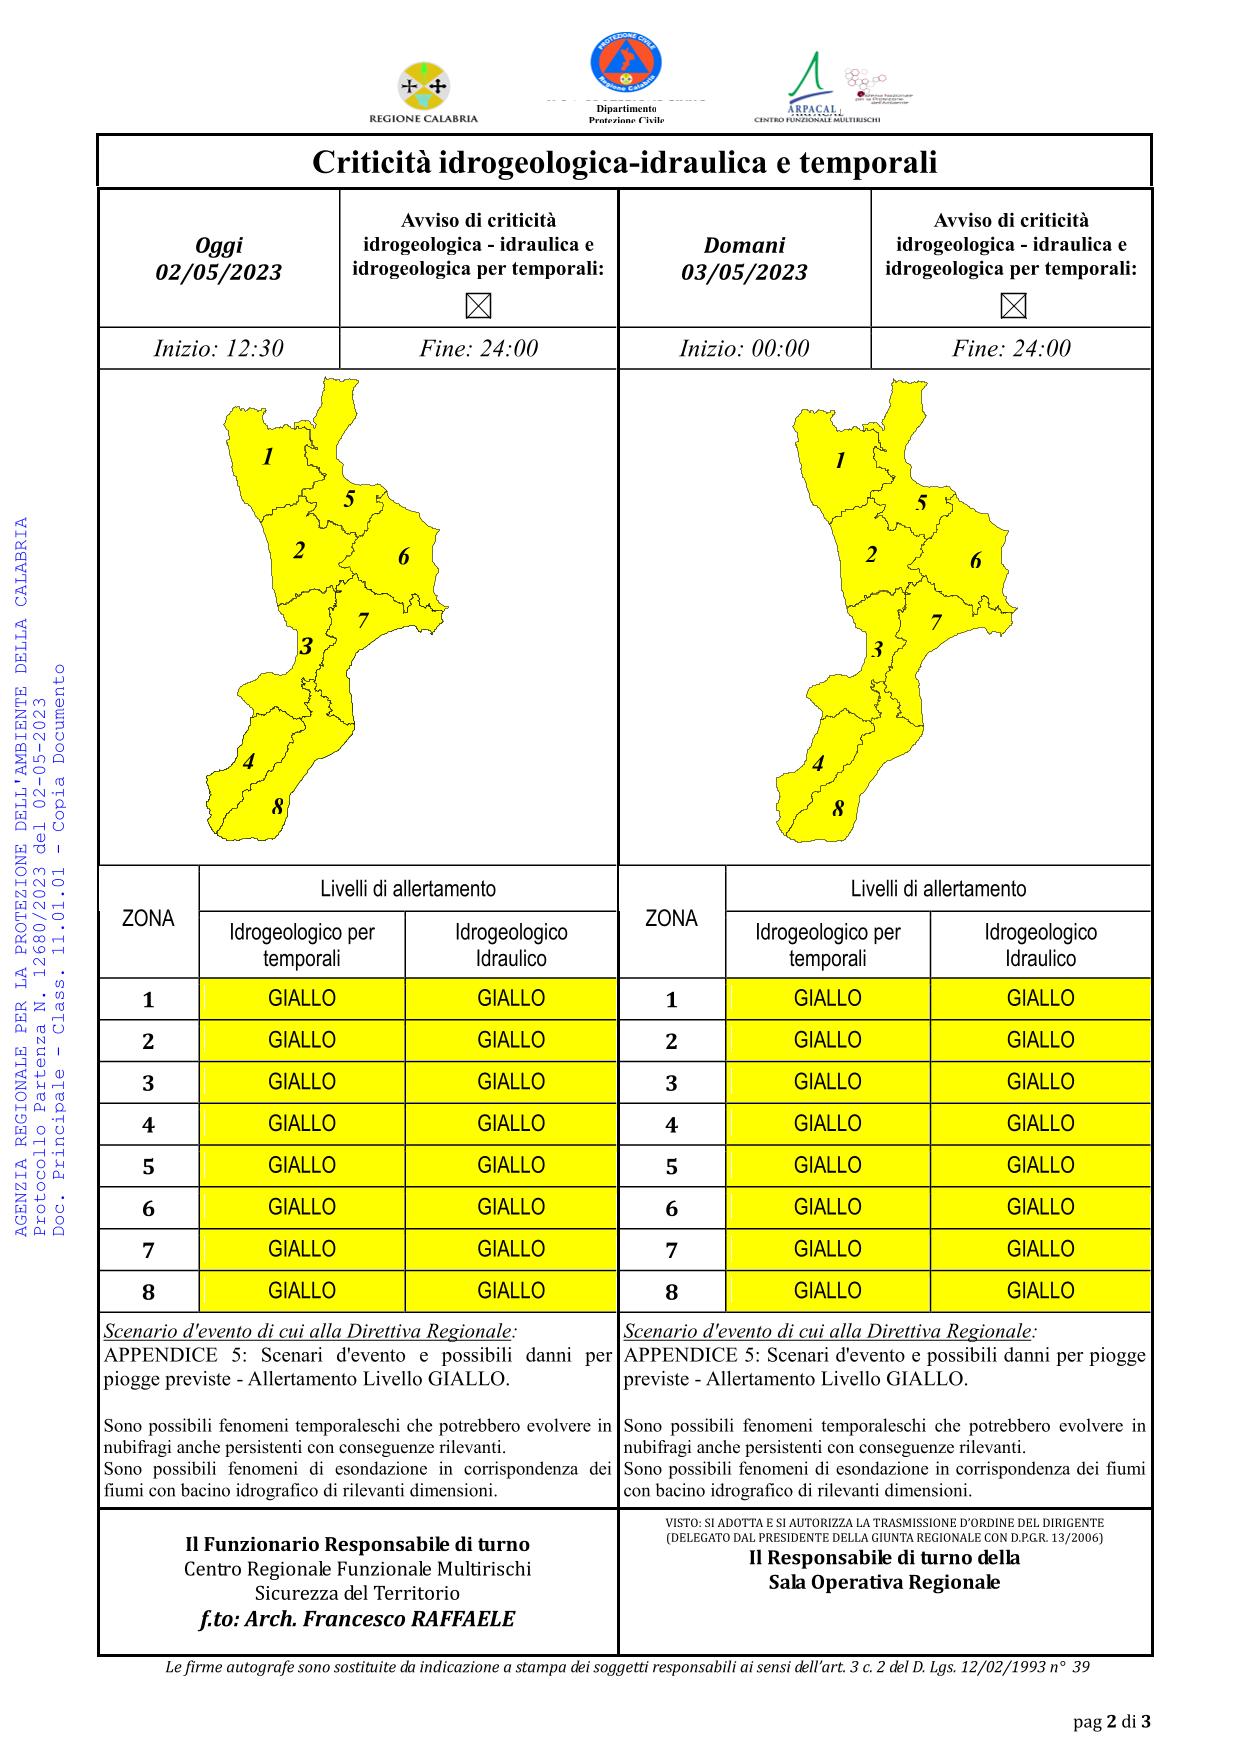 Criticità idrogeologica-idraulica e temporali in Calabria 02-05-2023